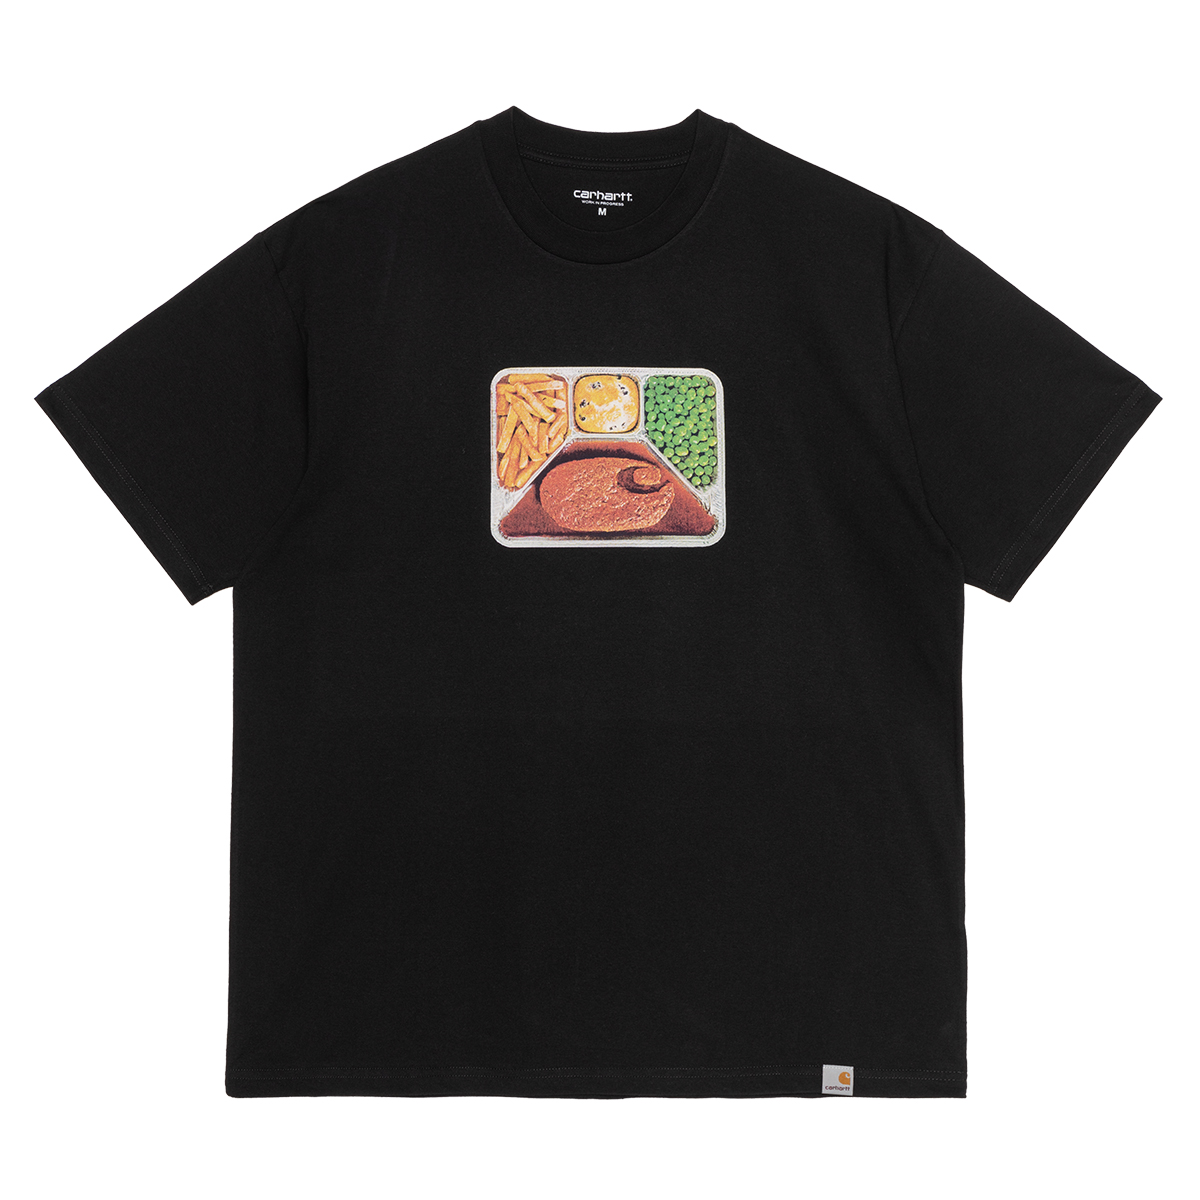 S/S Meatloaf T-Shirt